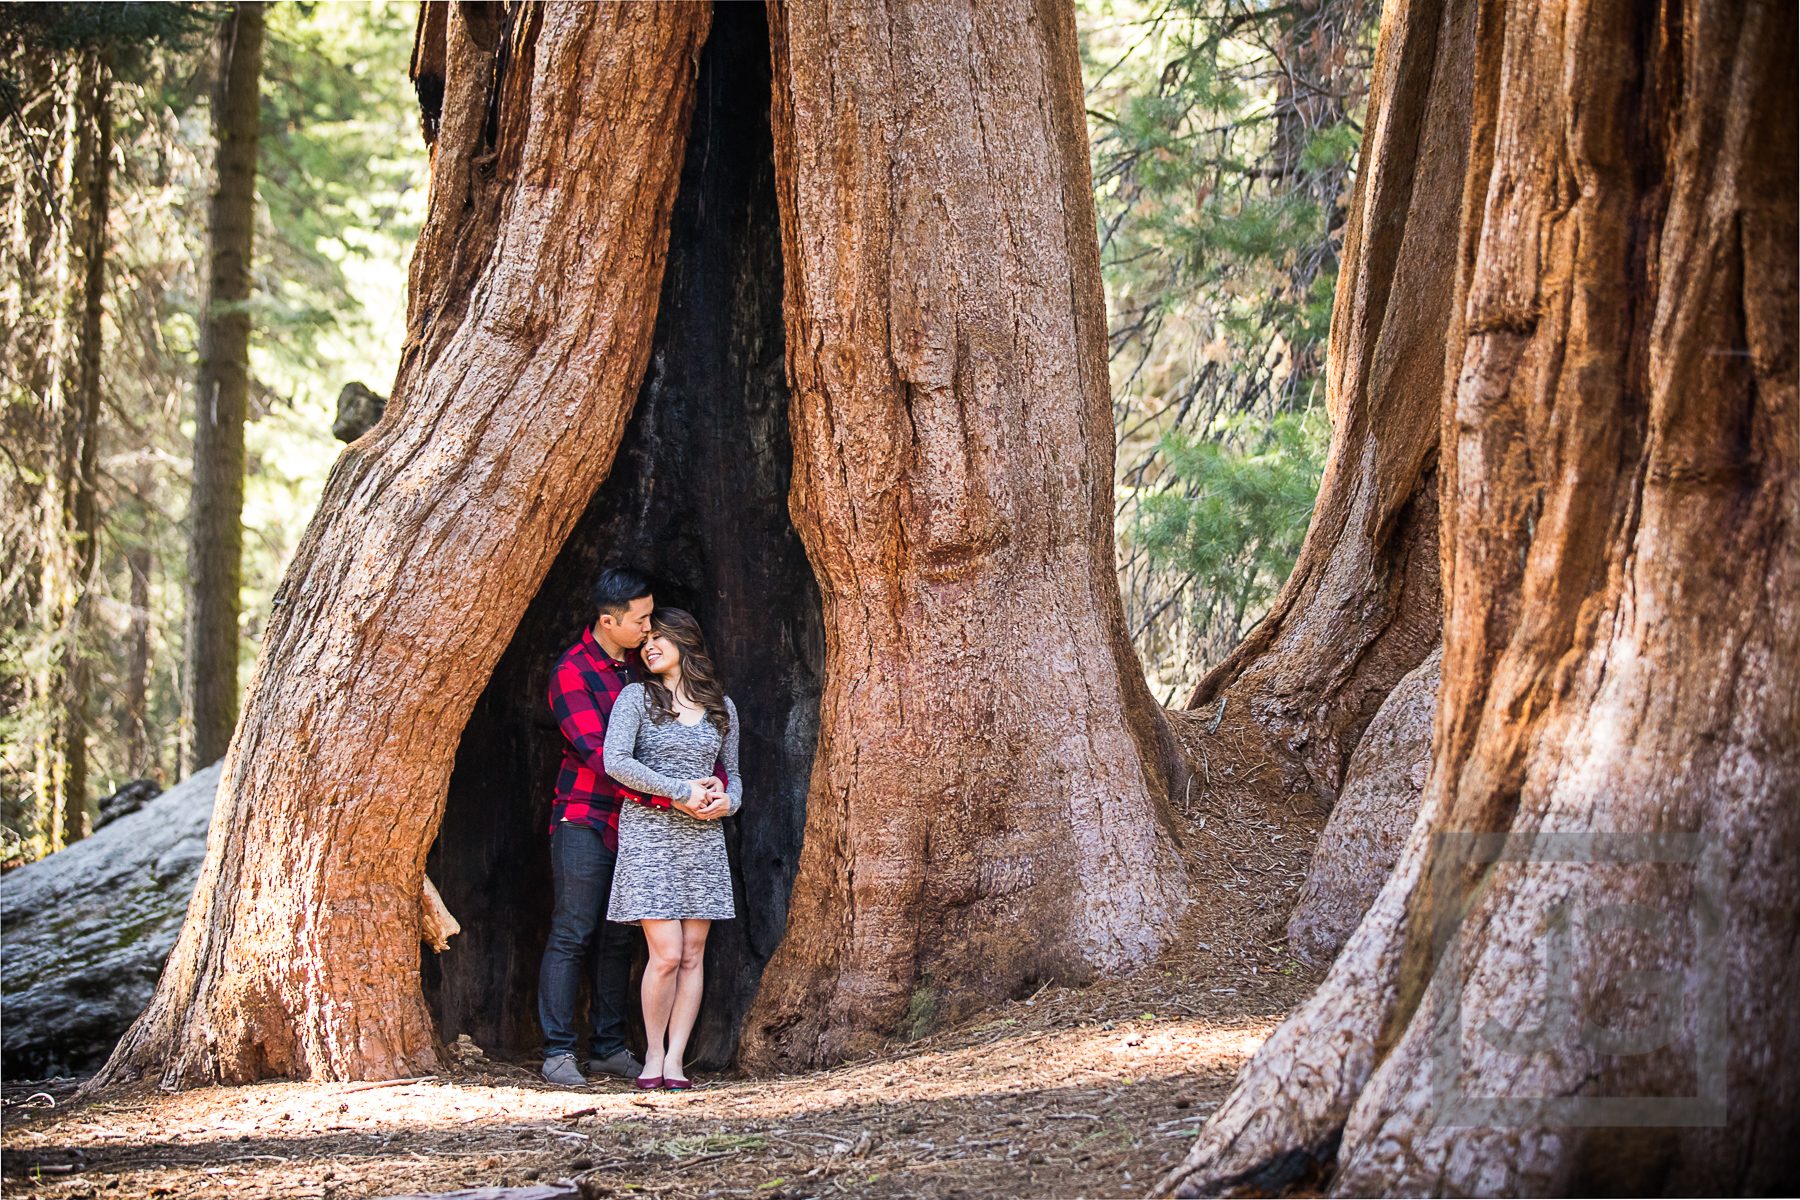 Inside a Sequoia Tree